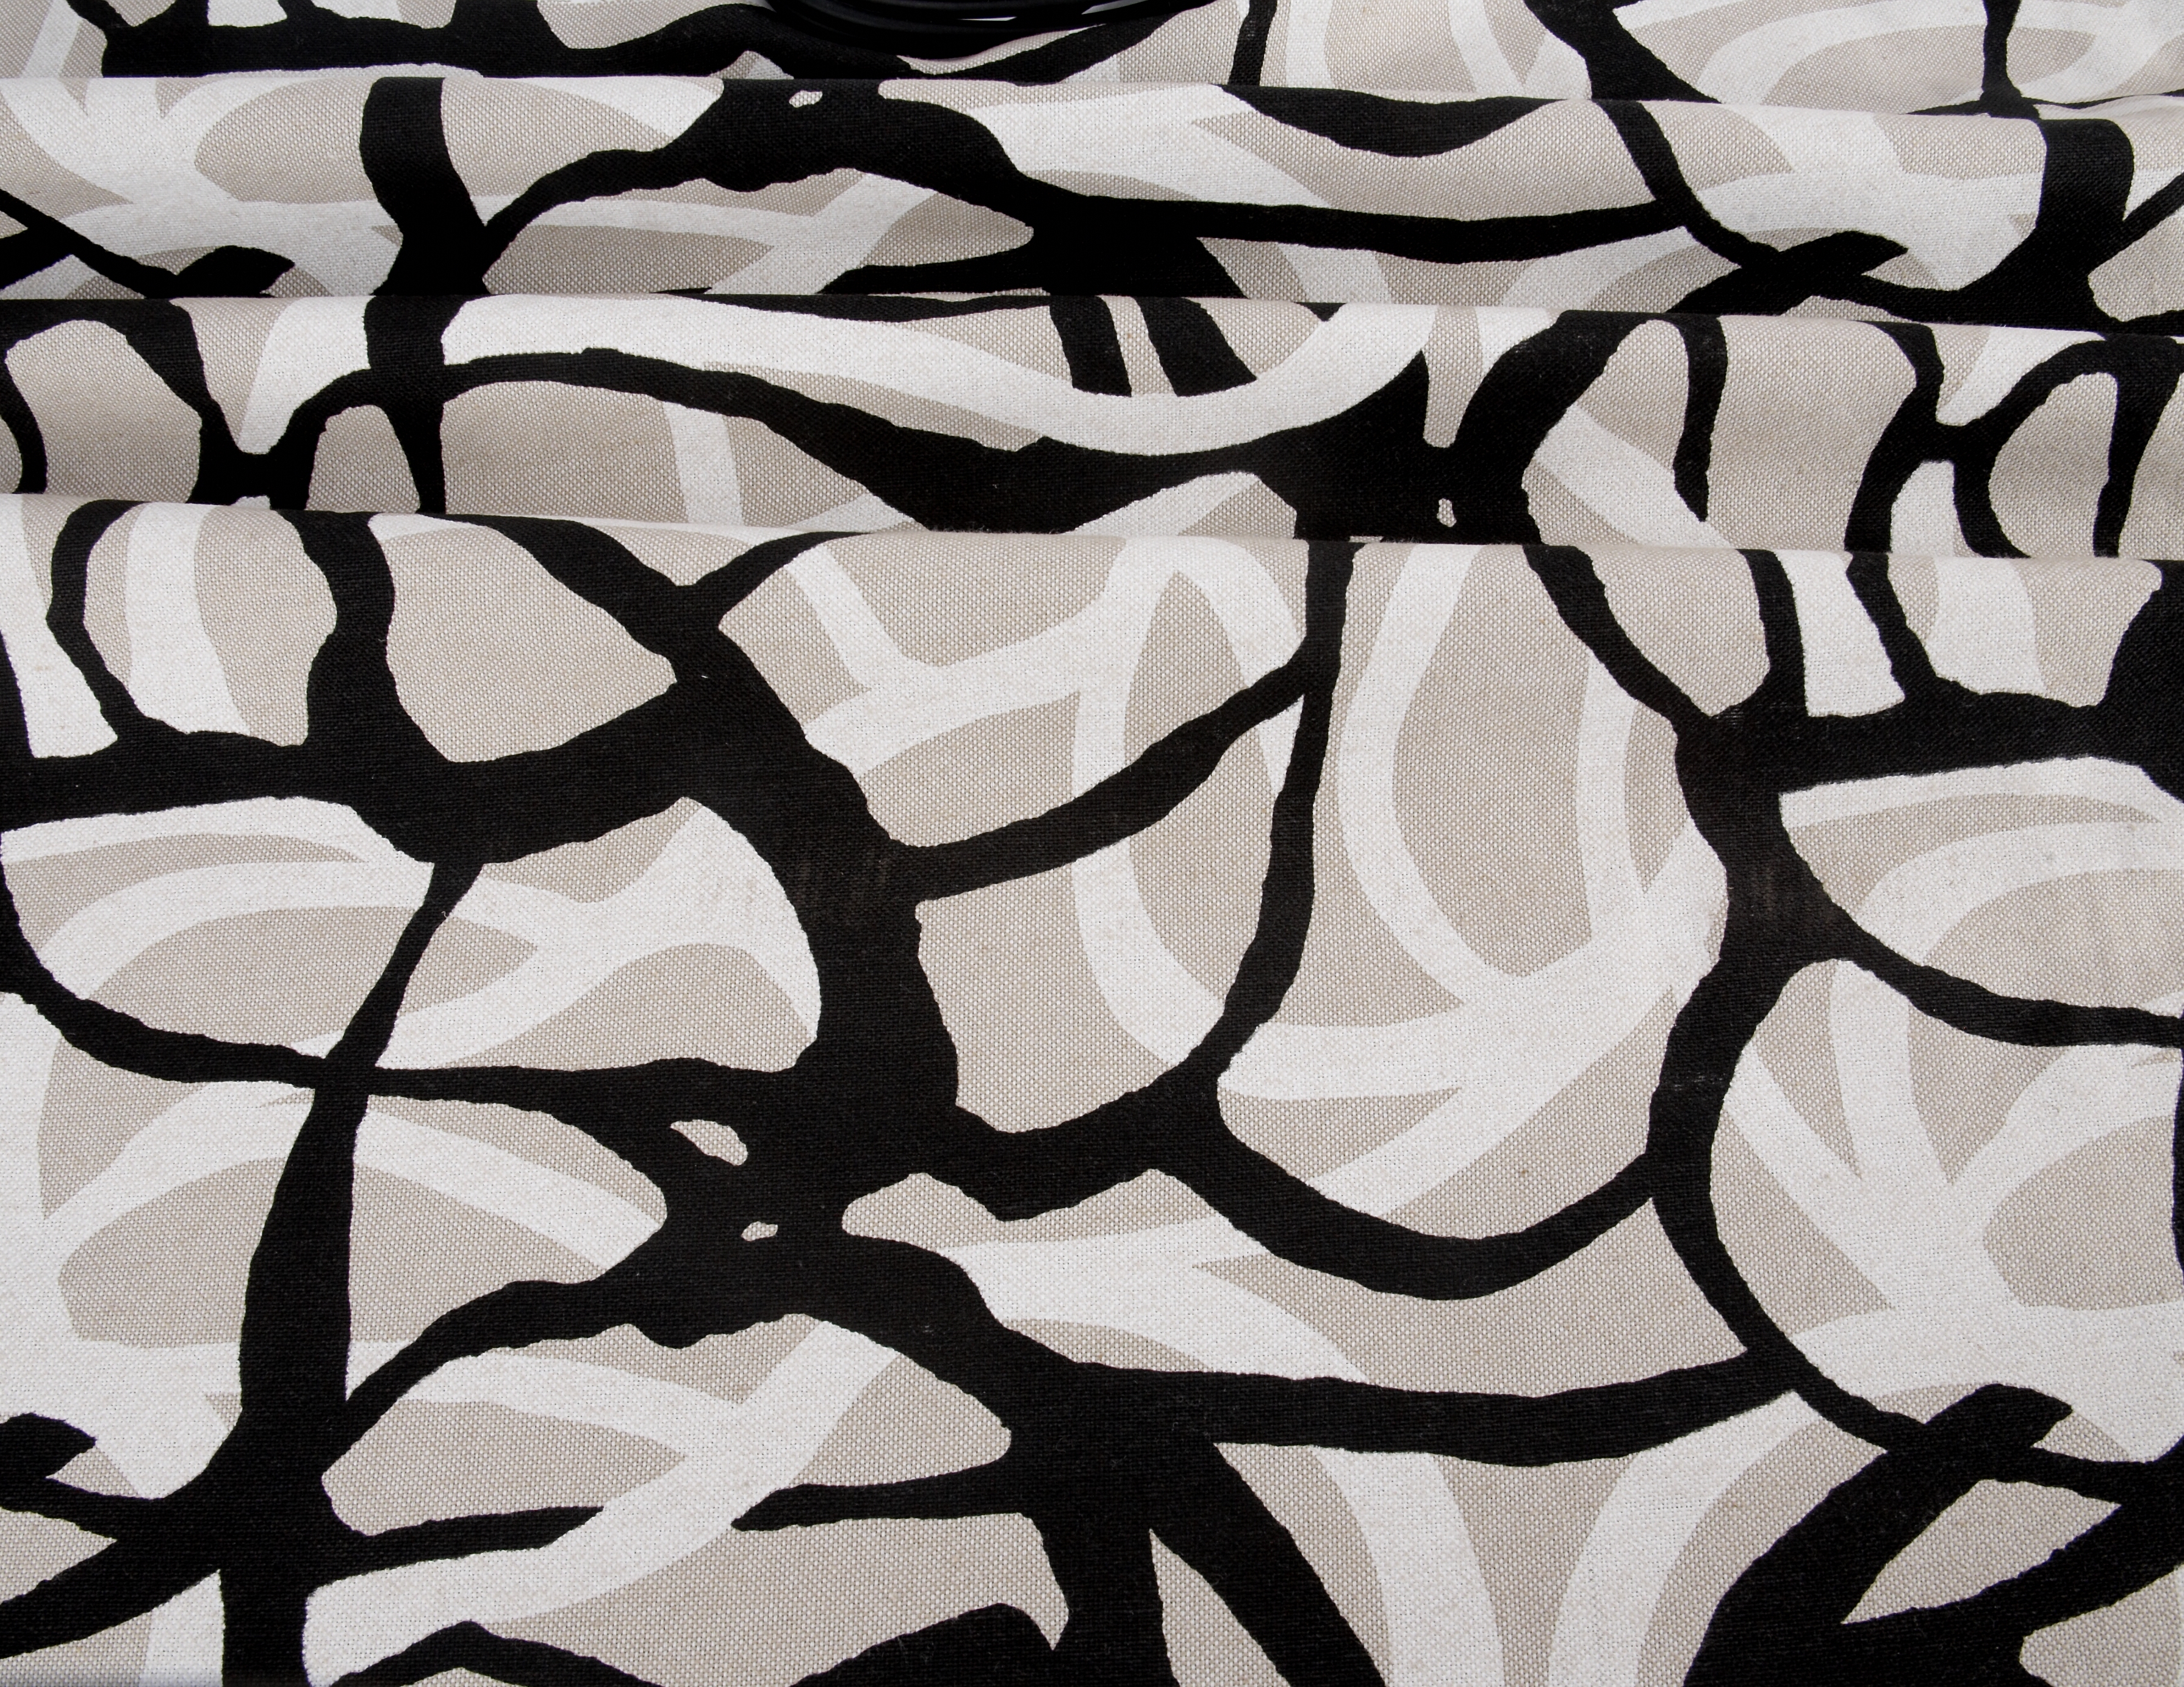 Abstract Doodle Print Linen Look Canvas - Black/Cream